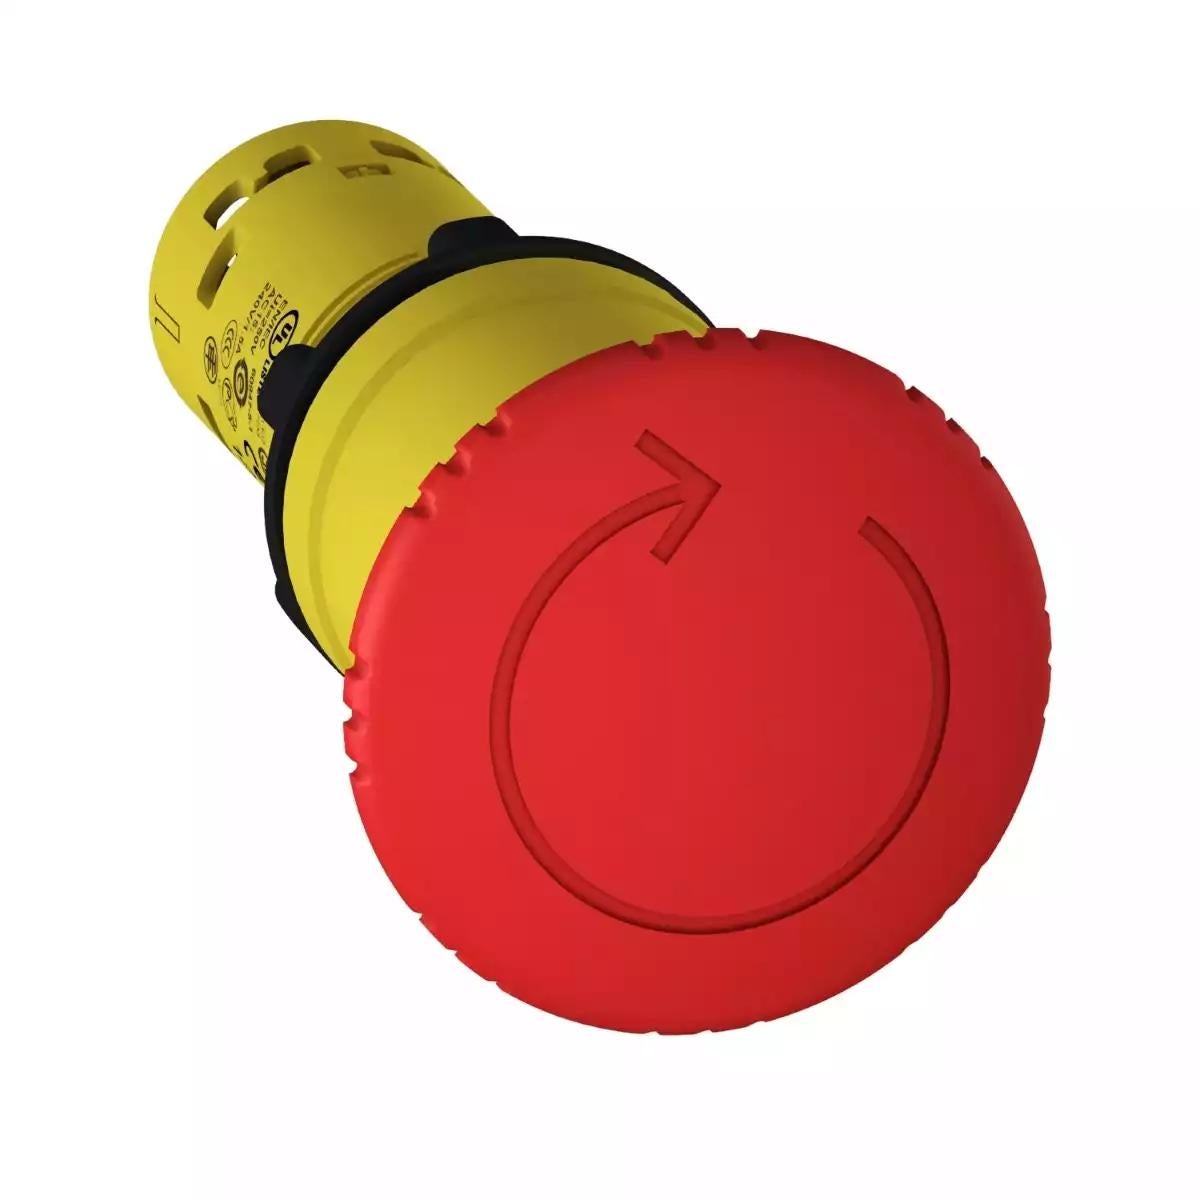 Schneider Electric Harmony XB7 Emergency stop Ã˜ 22 - red - mushroom head Ã˜ 40 mm - turn to release - 1 NC